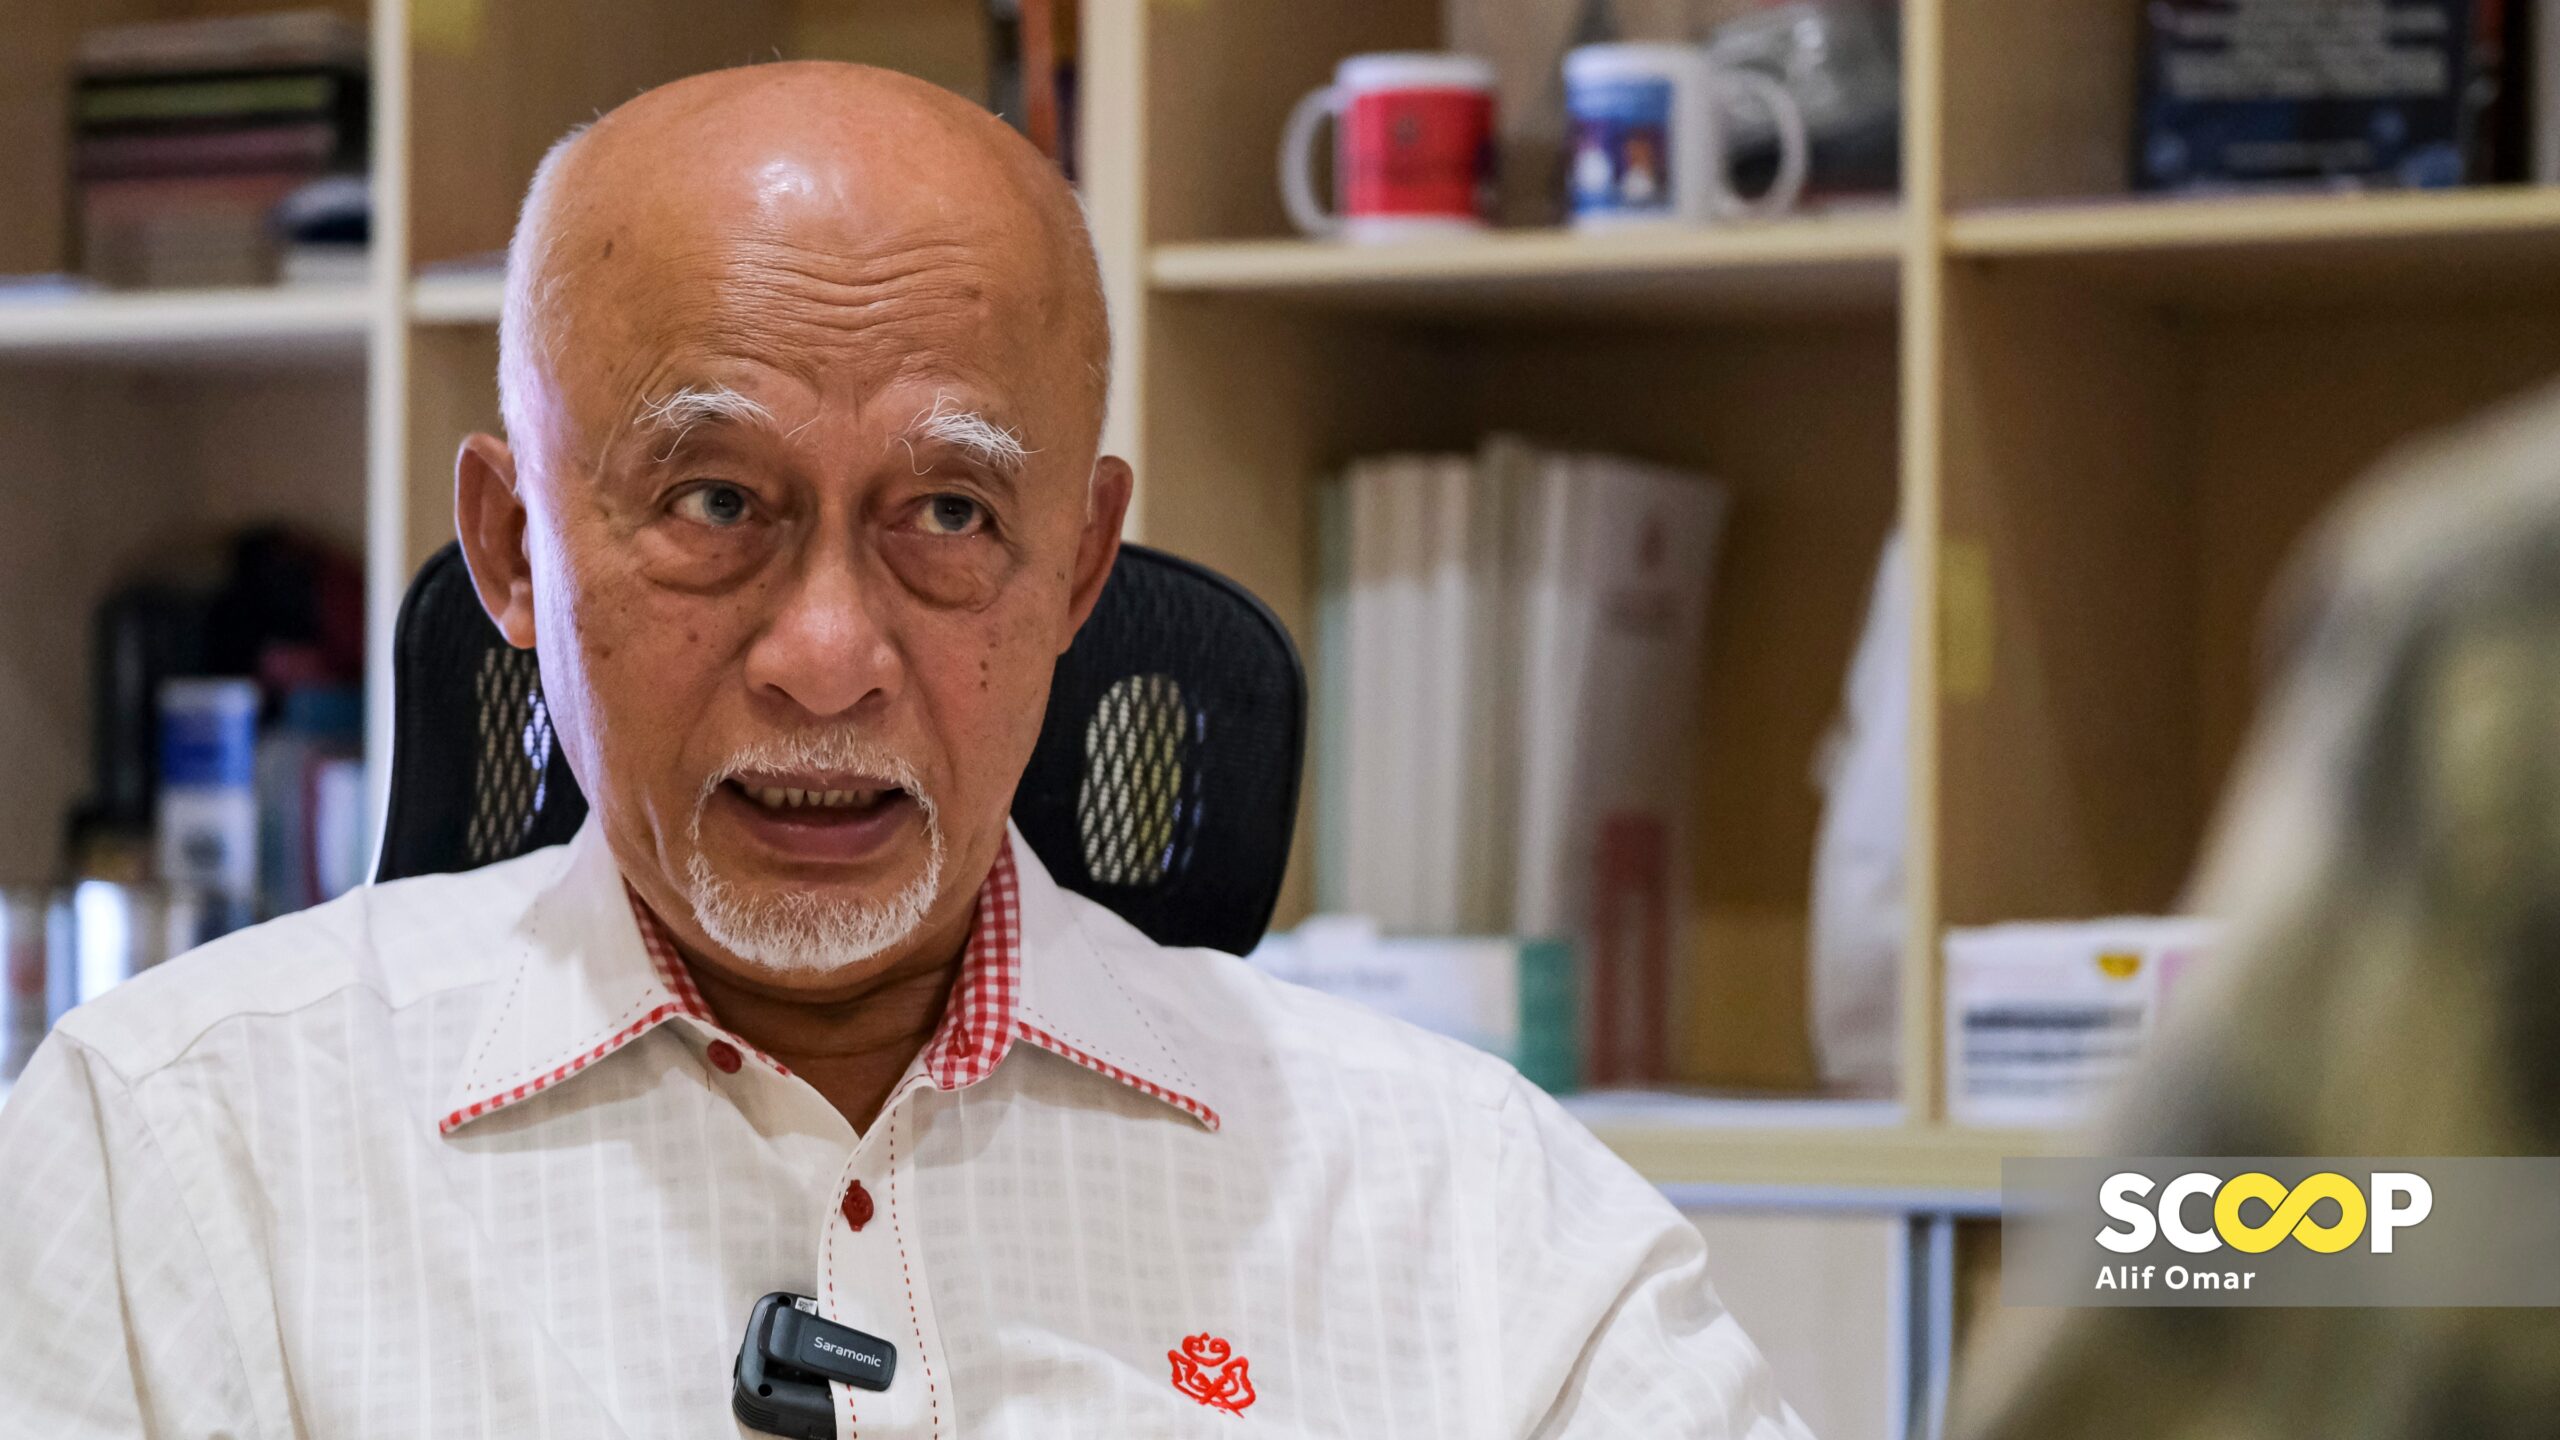 Bukan tindakan terdesak, bekas pemimpin perlu 'taubat nasuha' sebelum diterima kembali: Veteran Umno